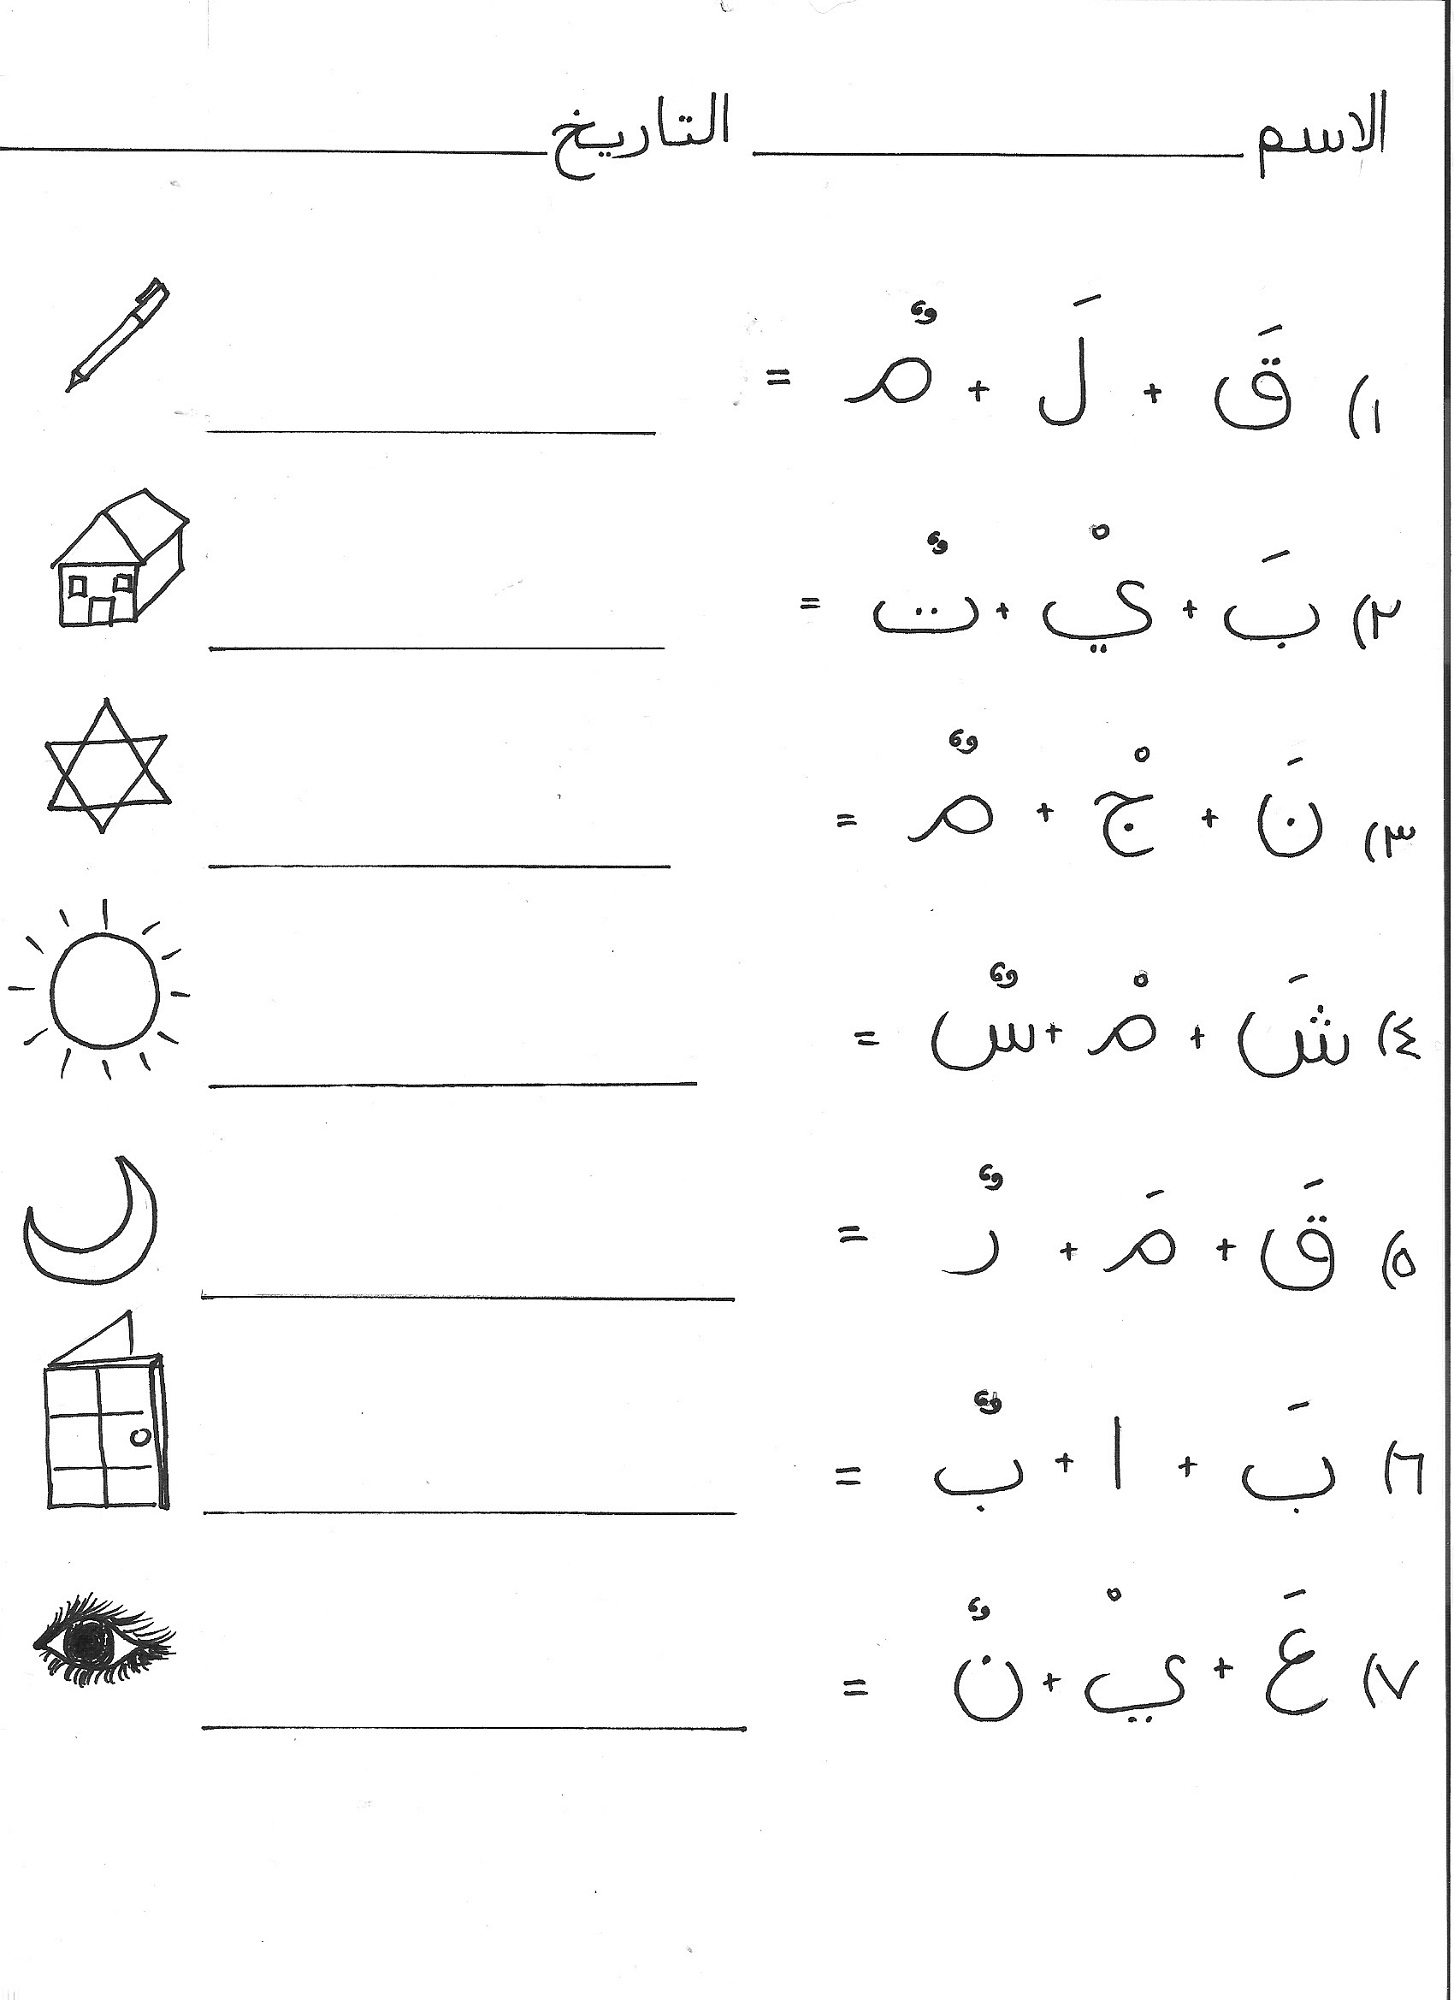 arabic-alphabet-activity-book-level-1-colored-edition-75d